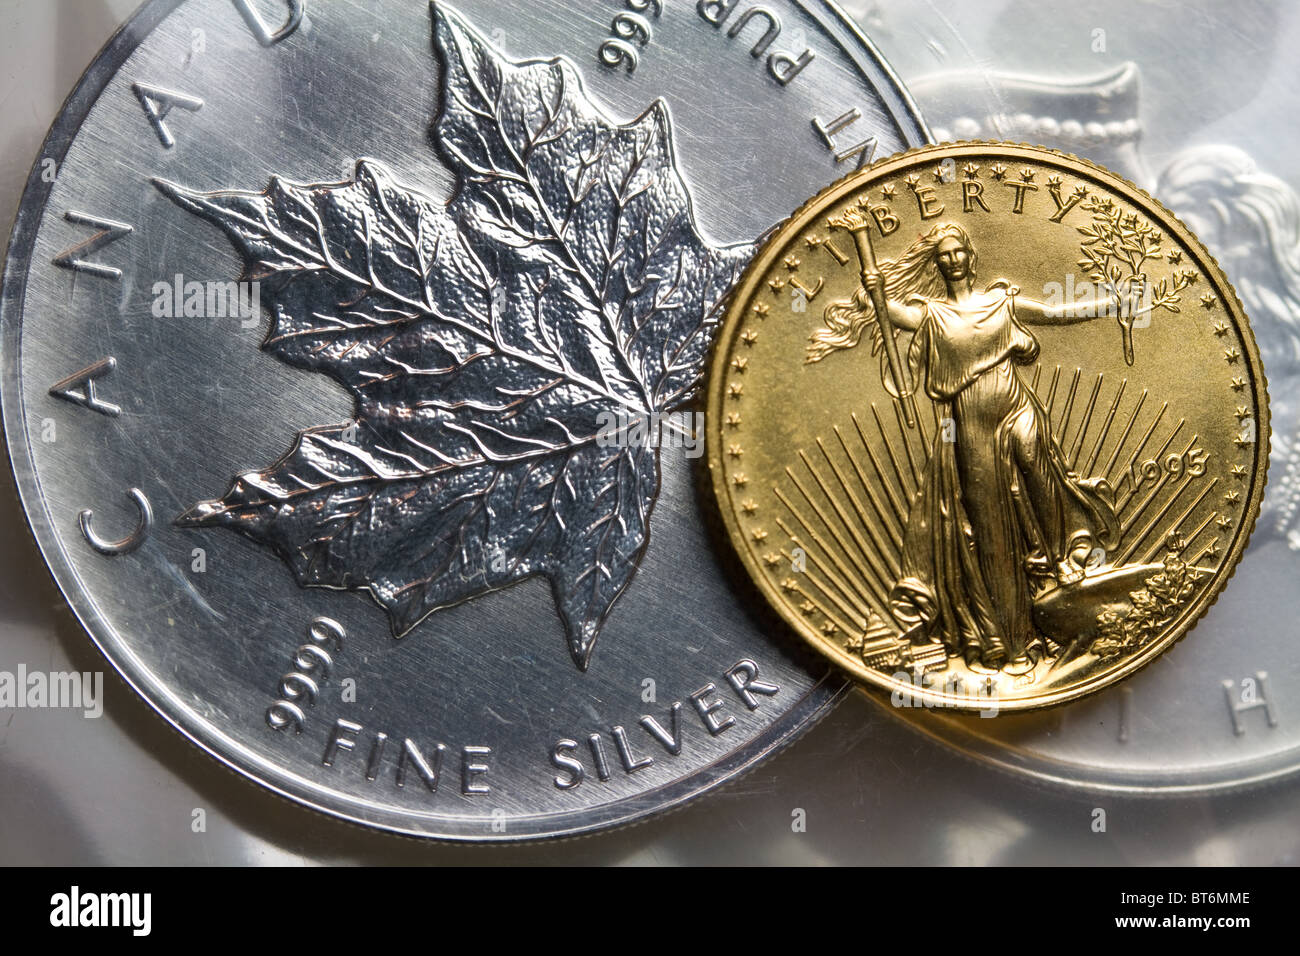 Canadian Maple Leaf Silver Bullion Coin - United States Gold Eagle Bullion Coin Stock Photo